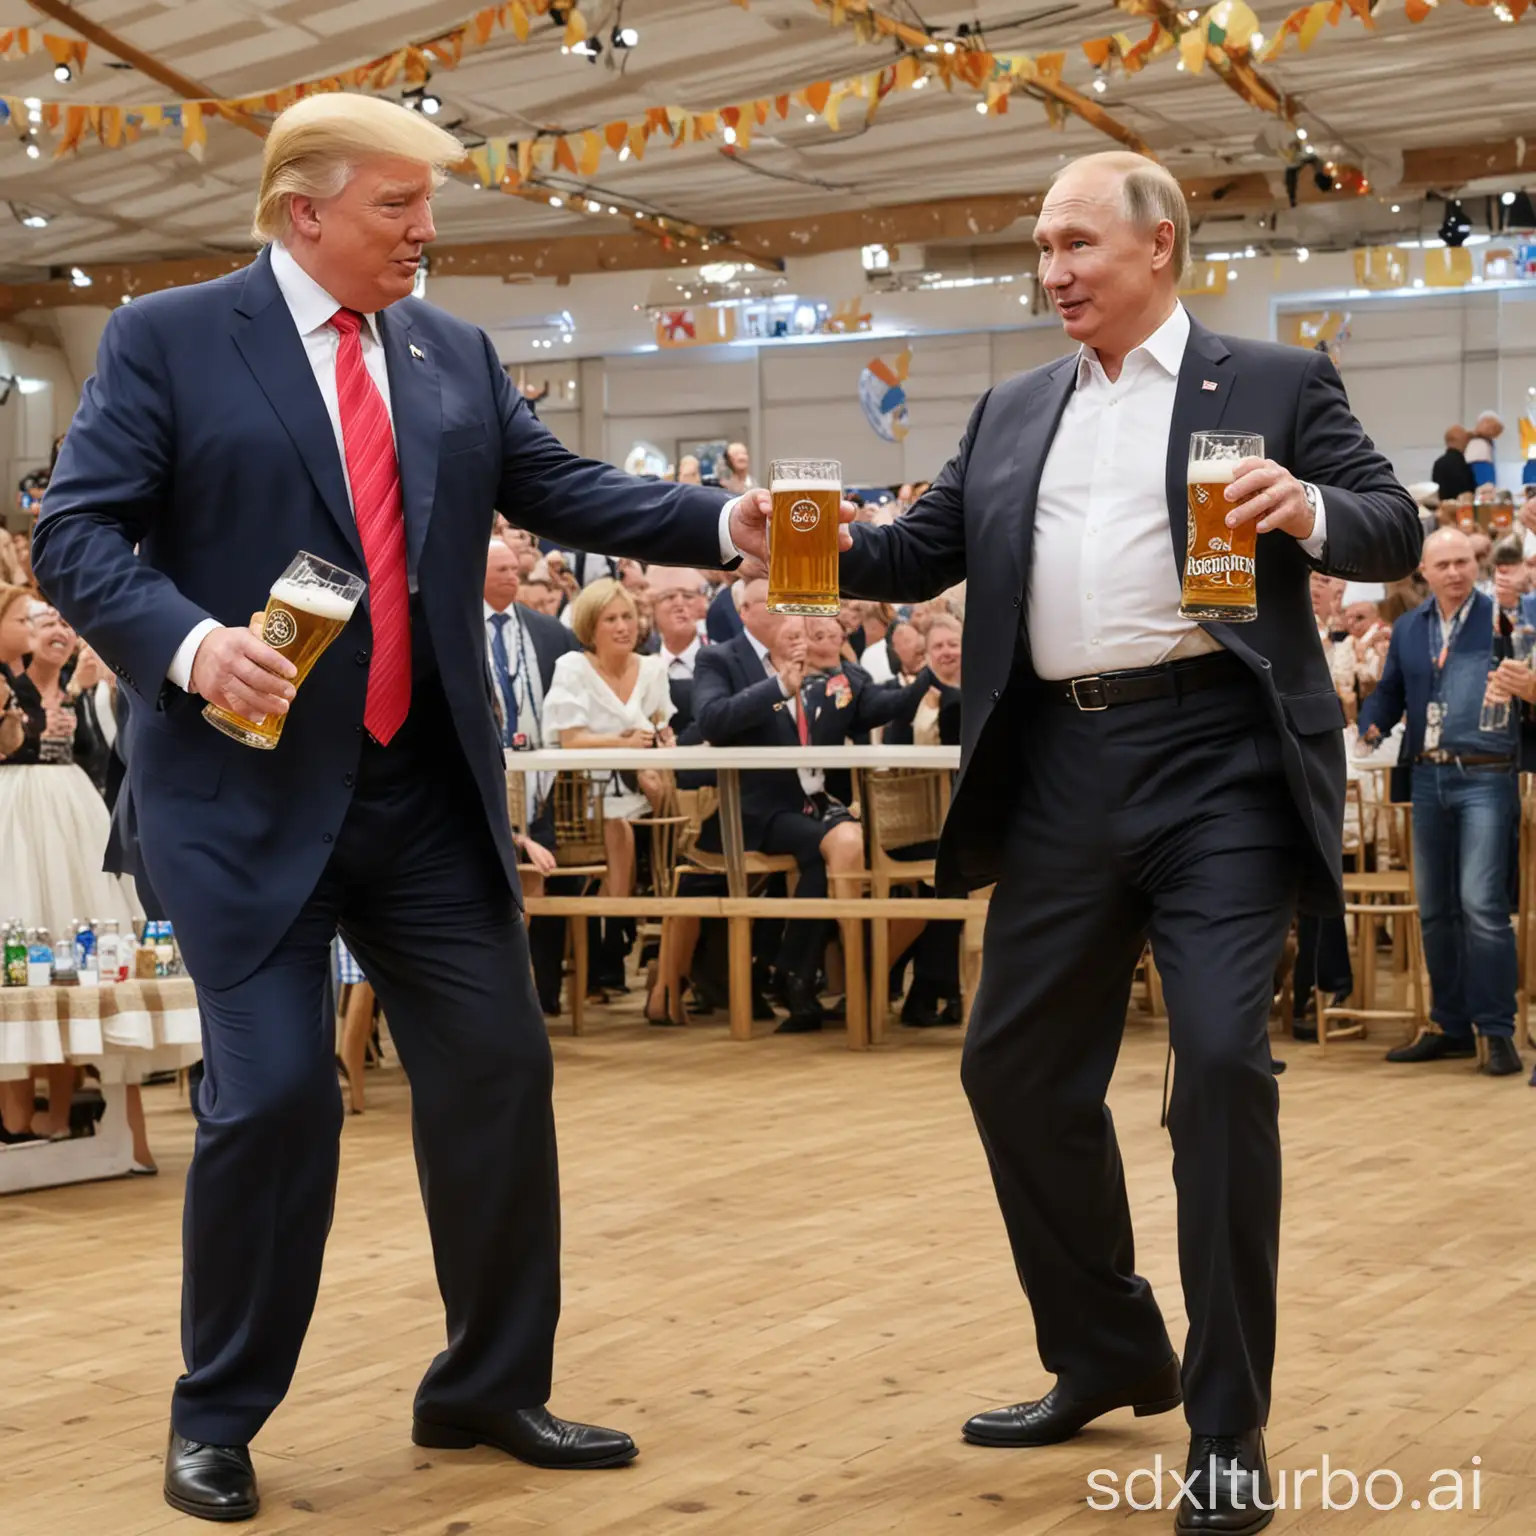 Donald Trump and Vladimir Putin dancing with beer at the Munich Oktoberfest